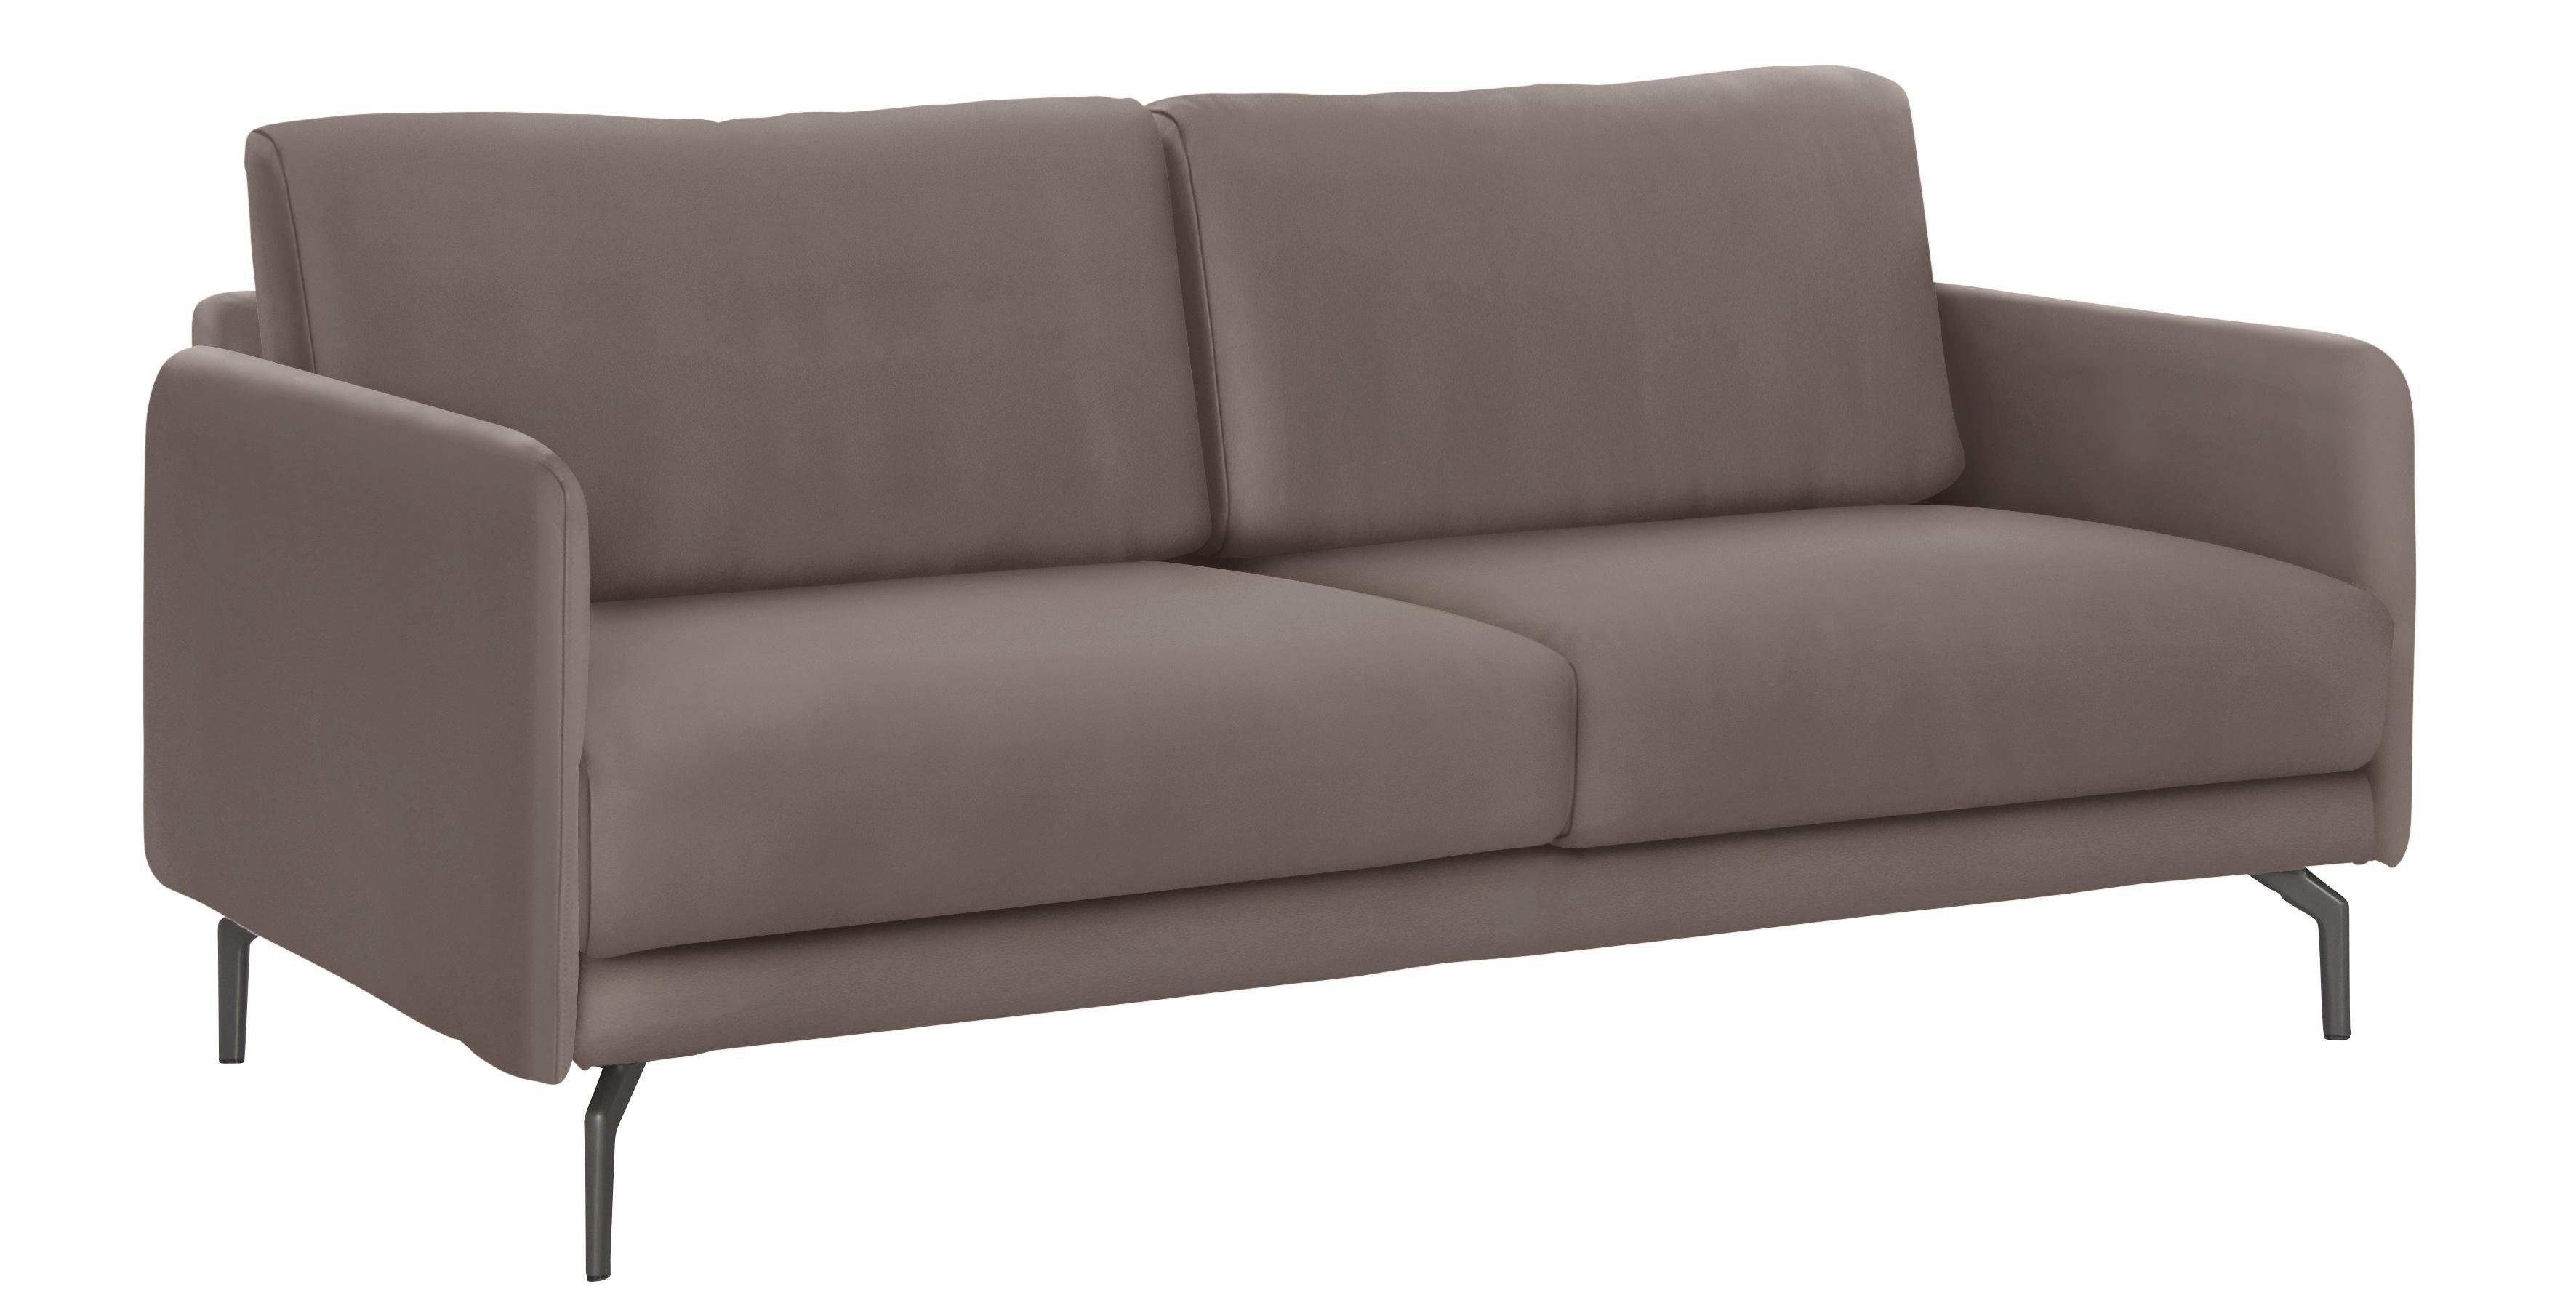 Breite sehr hs.450, 3-Sitzer sofa Armlehne Umbragrau 190 Alugussfuß hülsta cm, schmal,